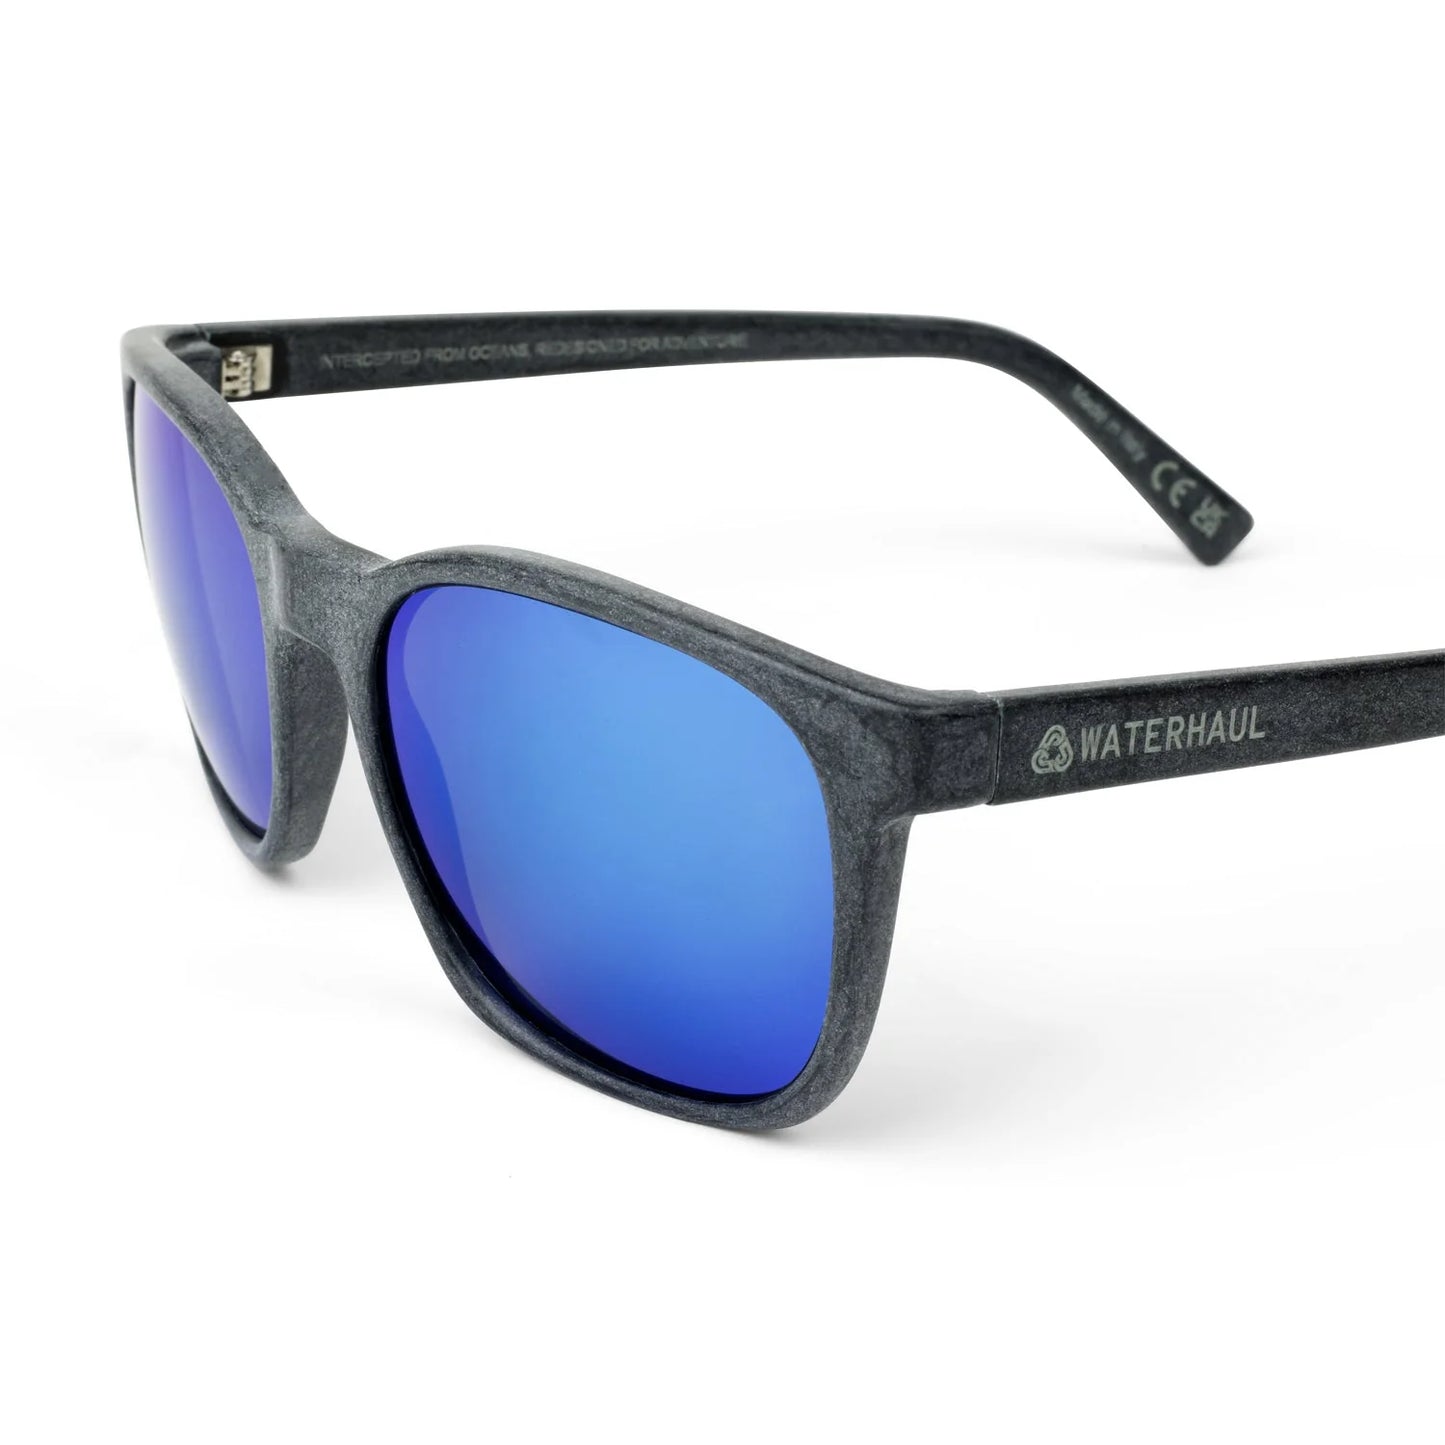 Fitzroy Blue Slate Waterhaul Sunglasses